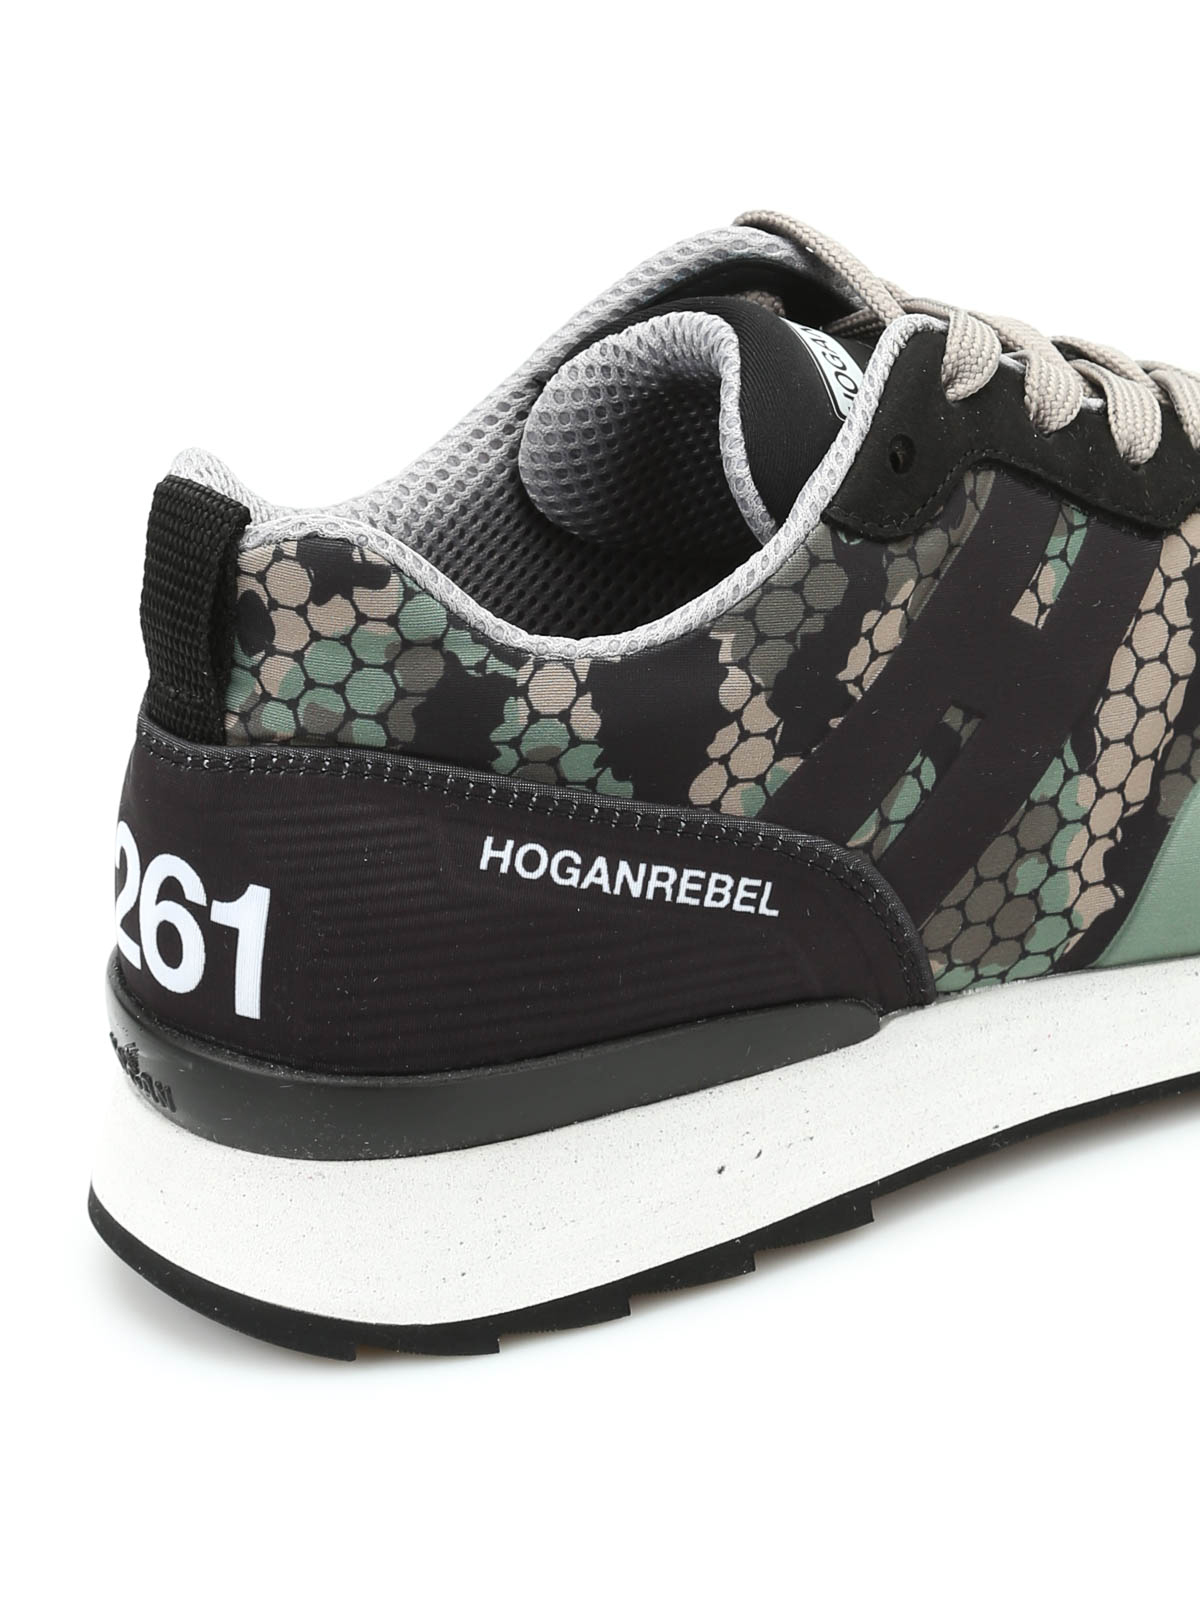 Hogan Rebel - Running R261 sneakers 